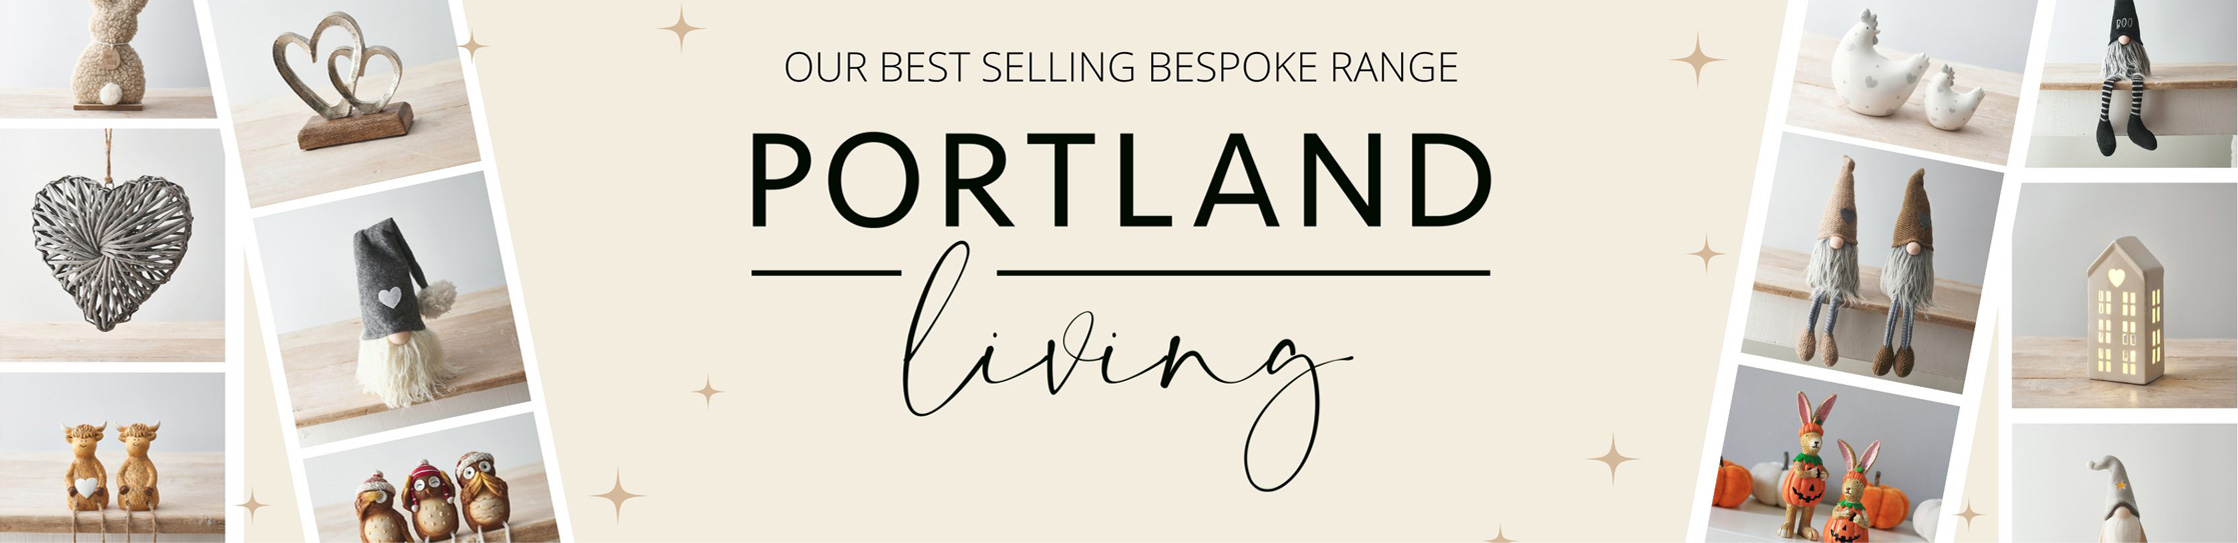 Our best selling bespoke range - Portland Living